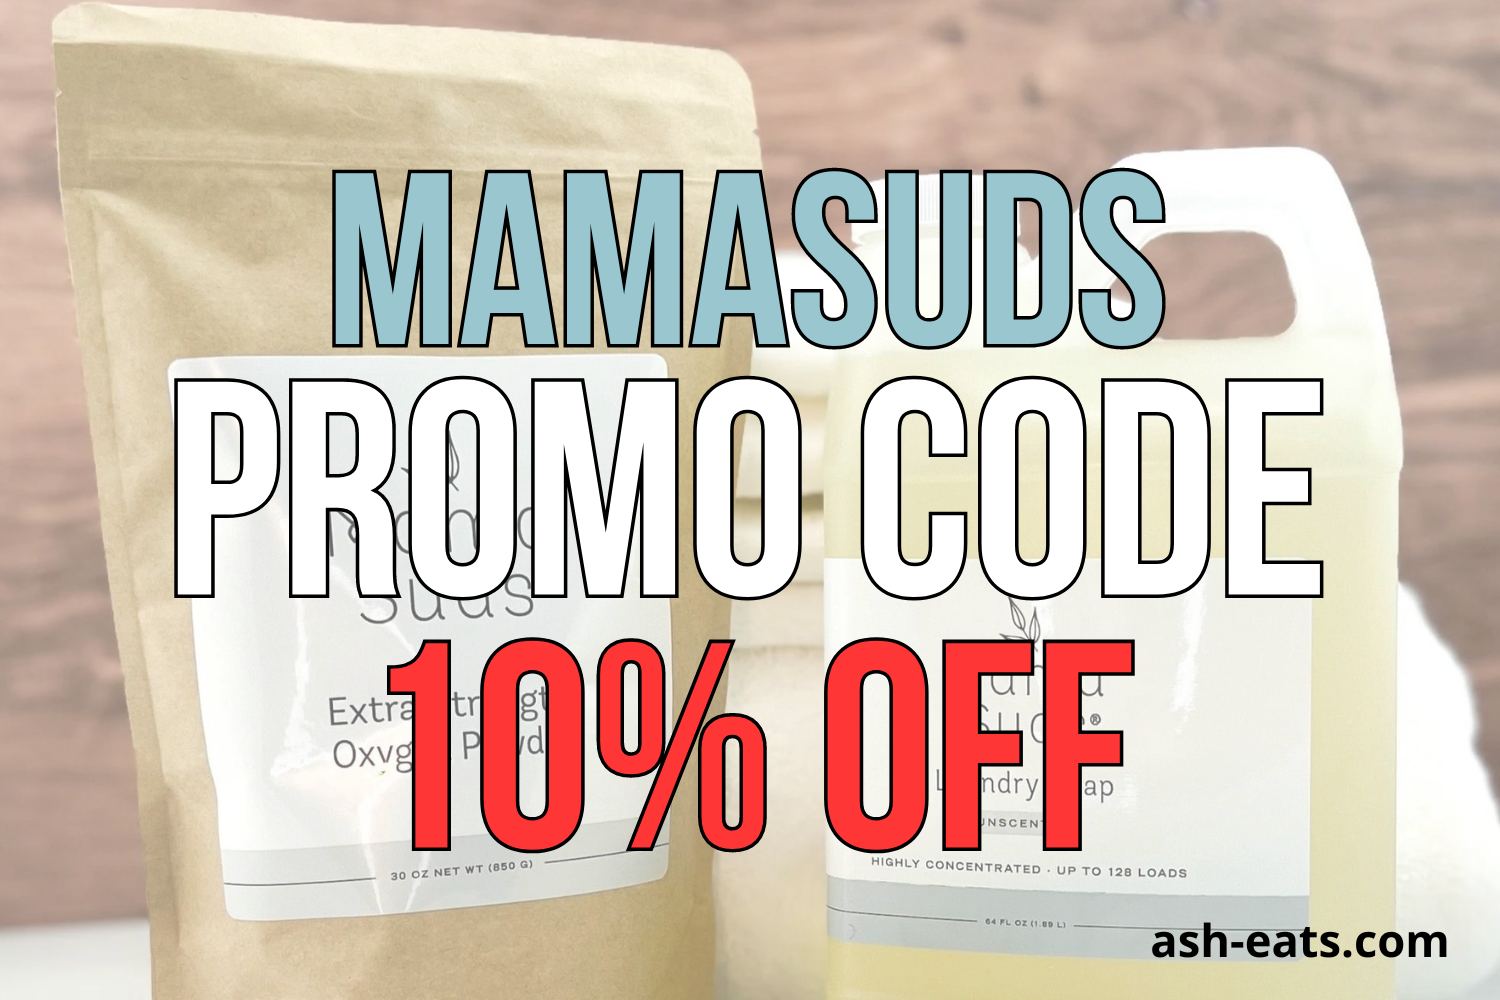 mamasuds promo code